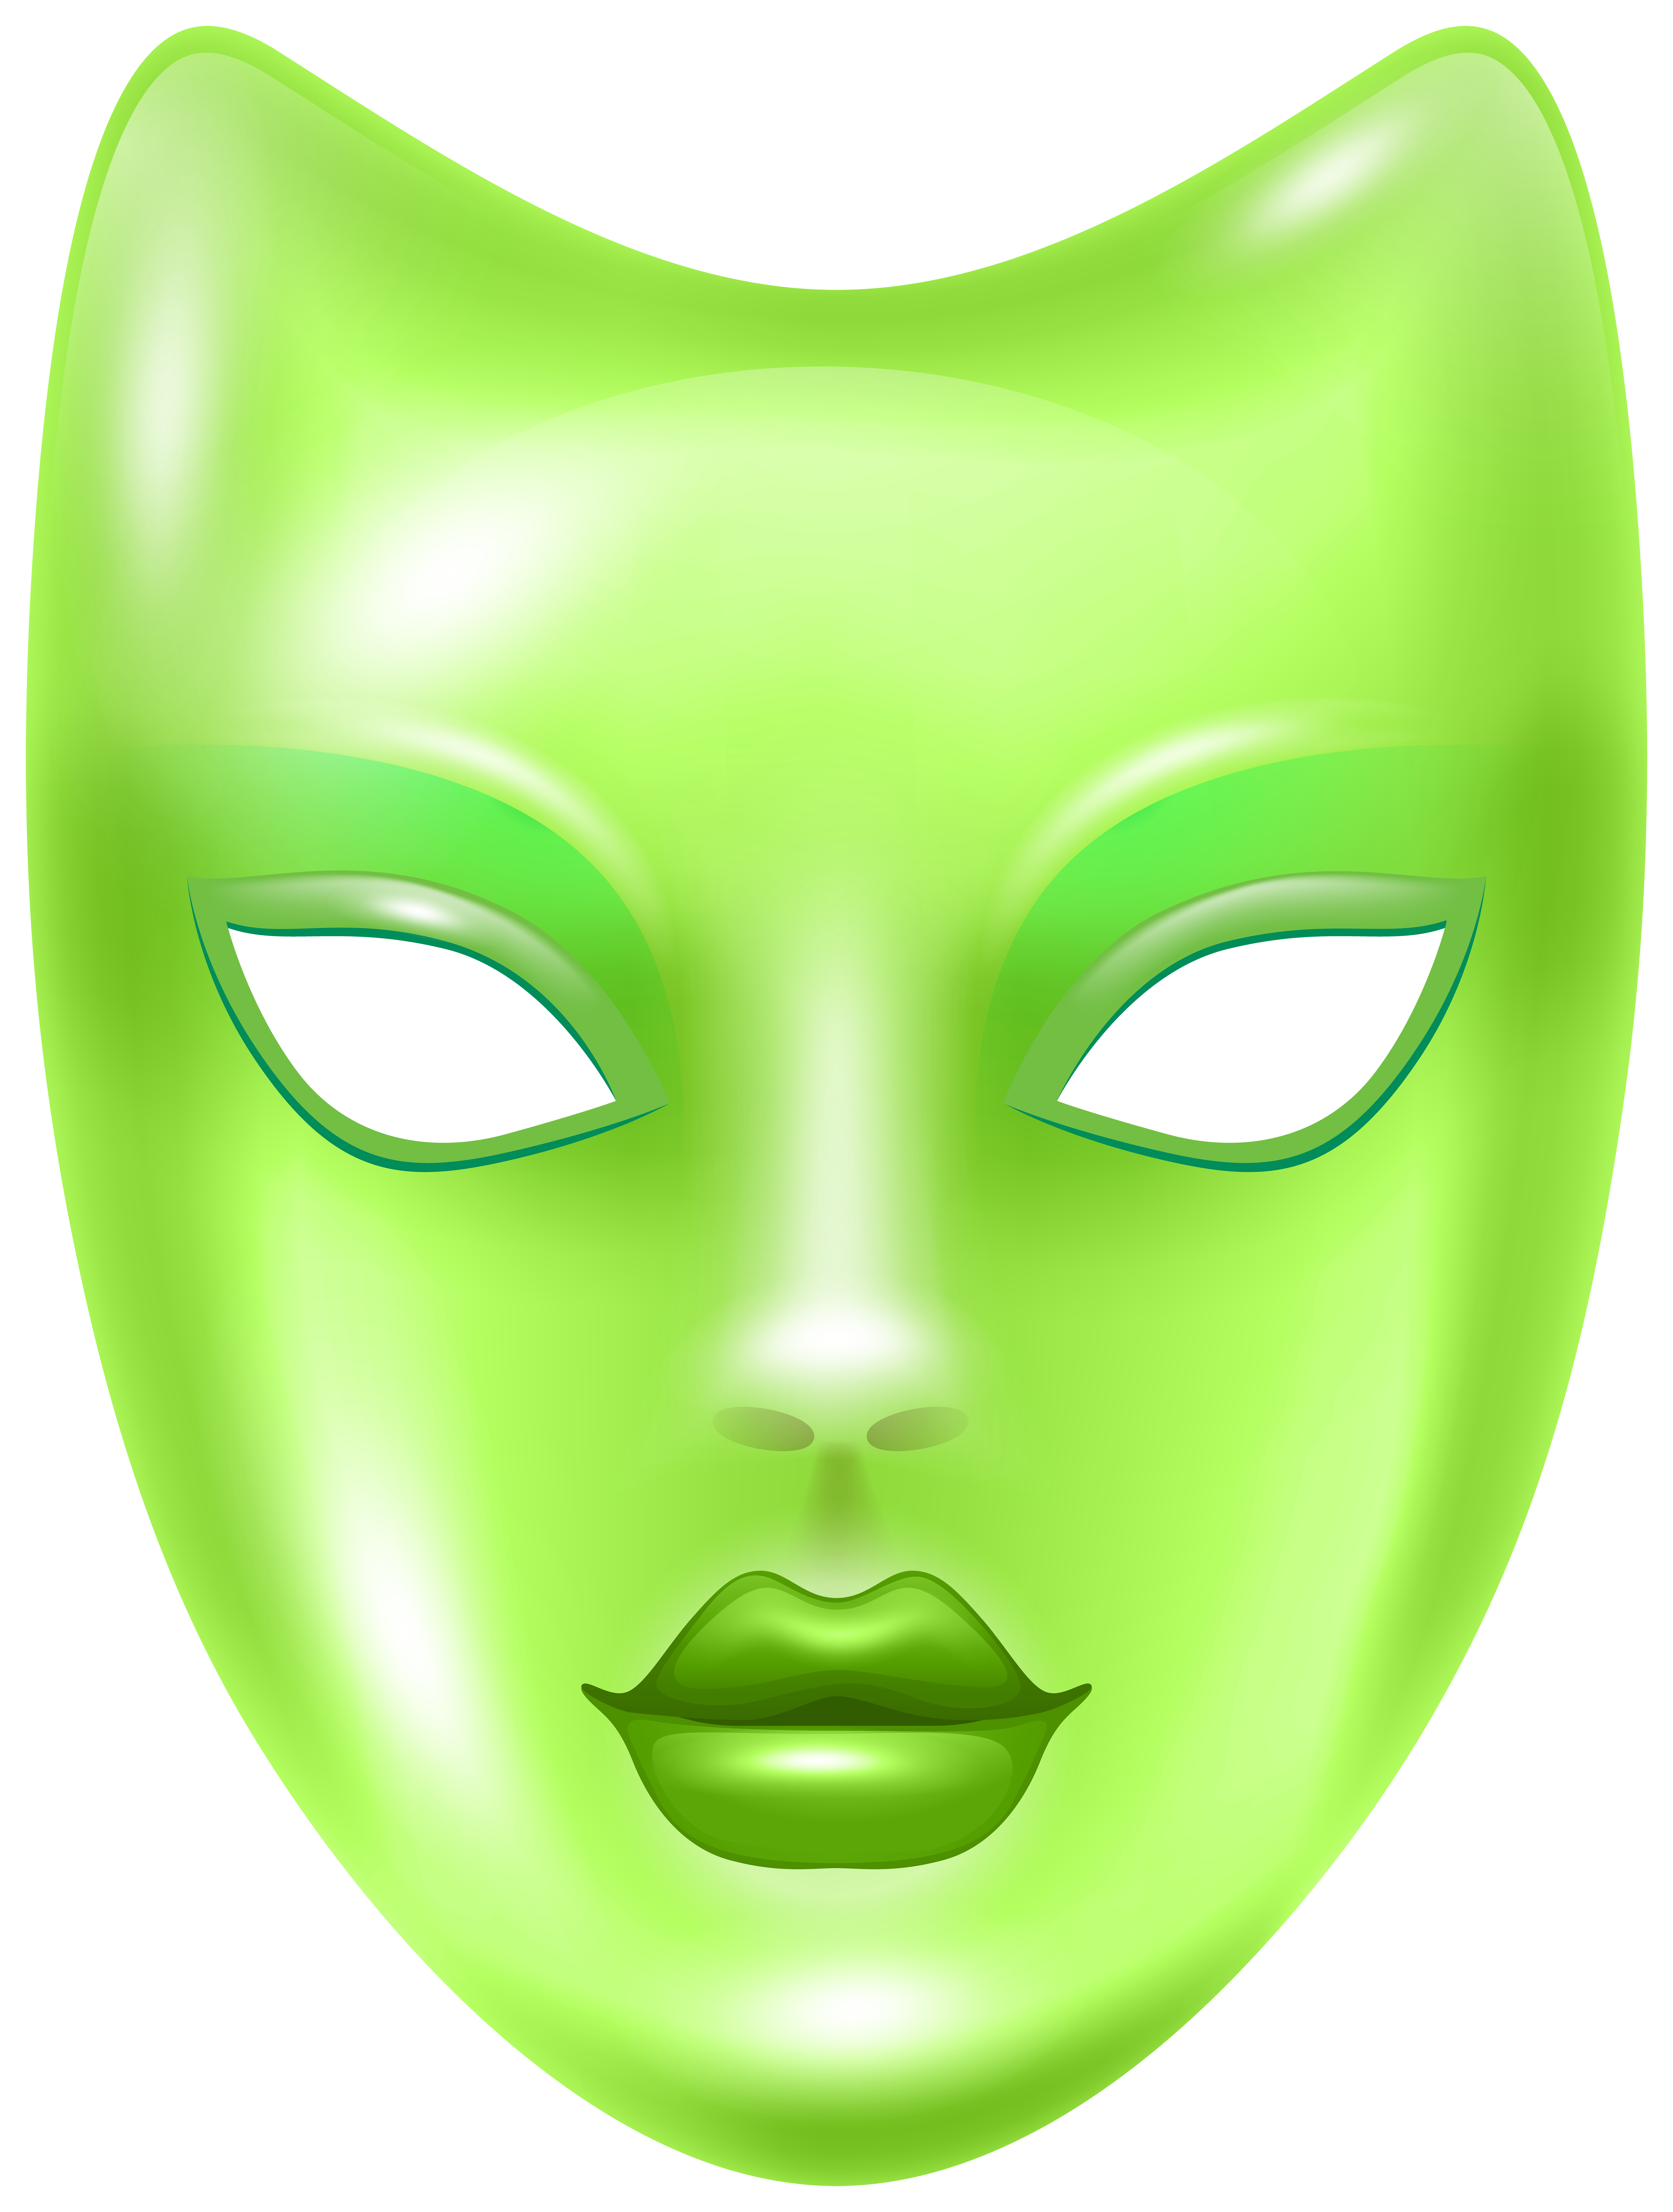 Mask clipart face mask, Mask face mask Transparent FREE for download on